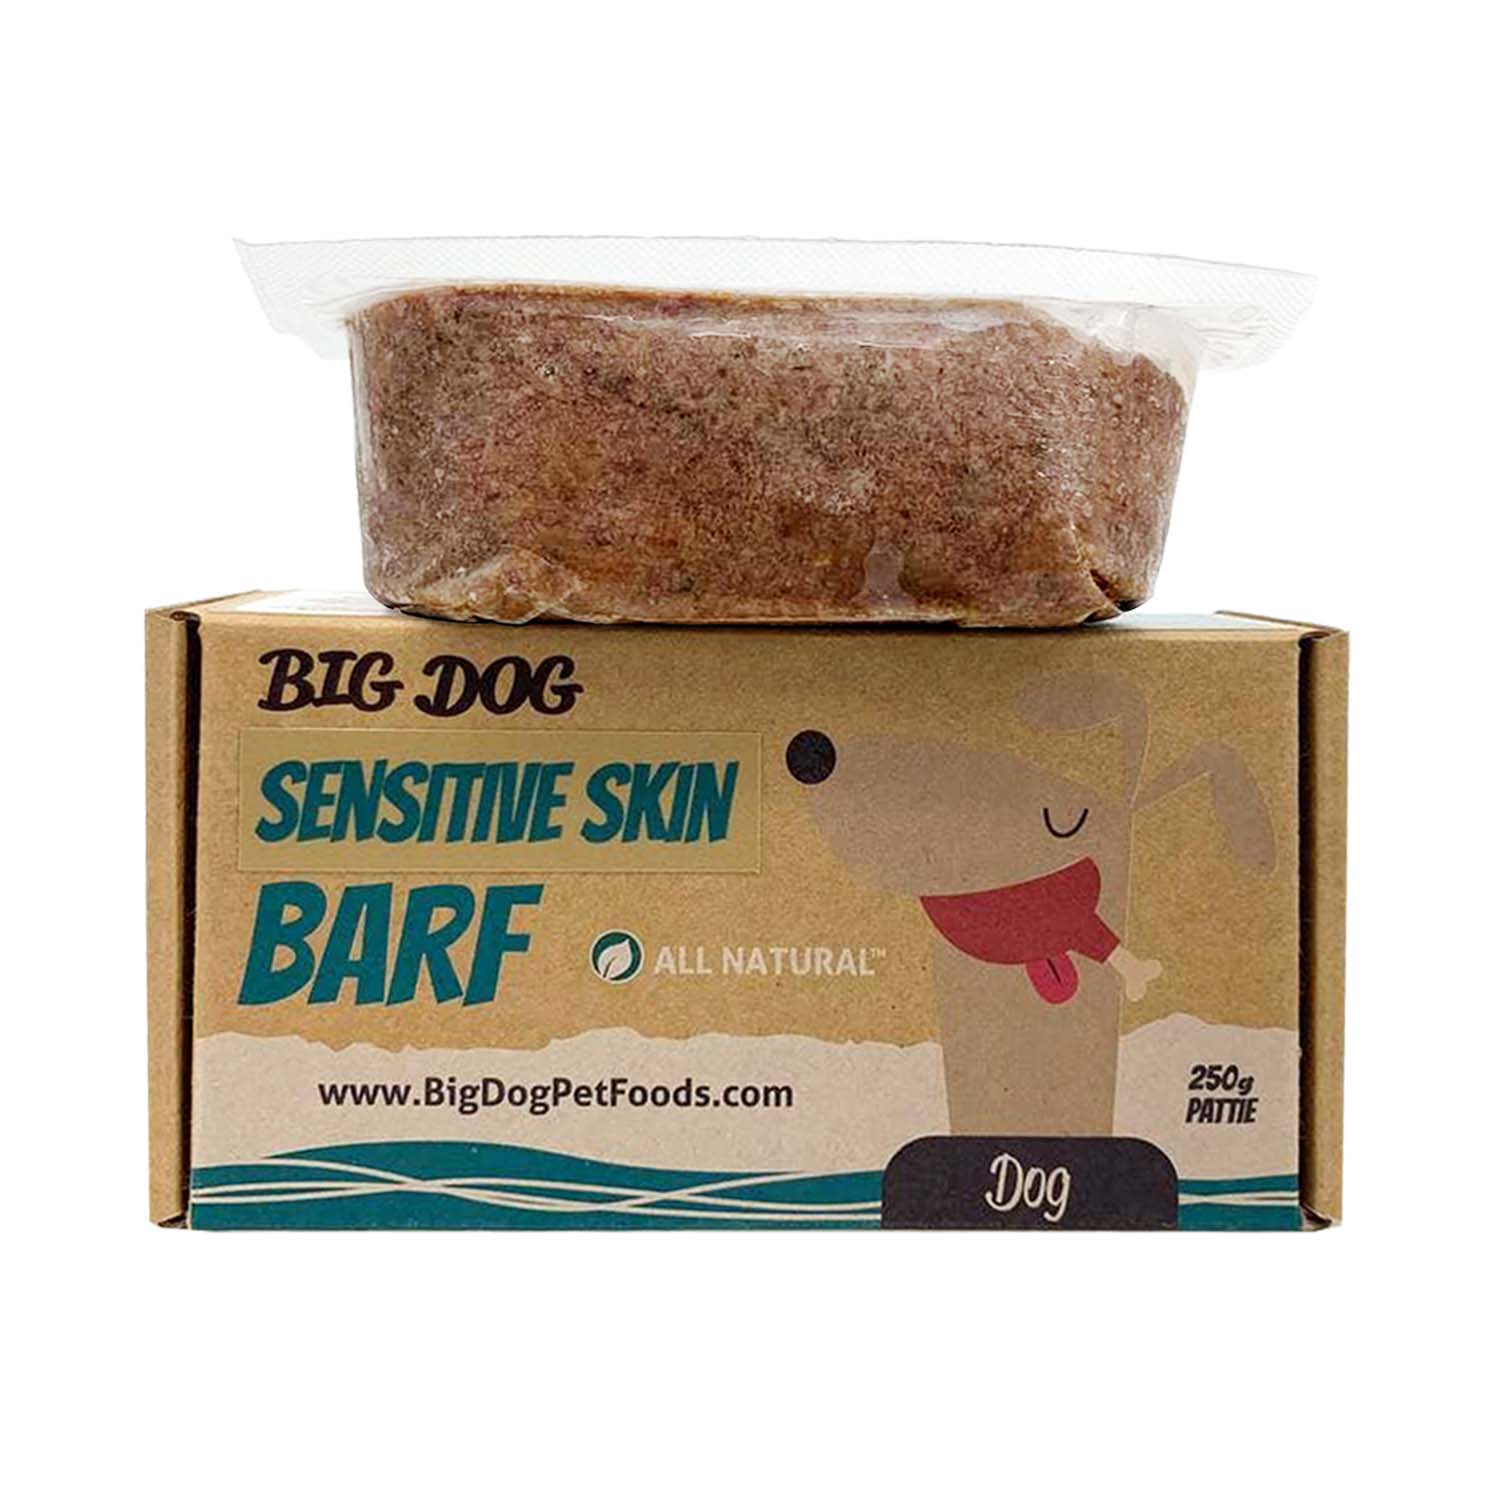 TRY & BUY: Big Dog Barf Raw Dog Food (Sensitive Skin)